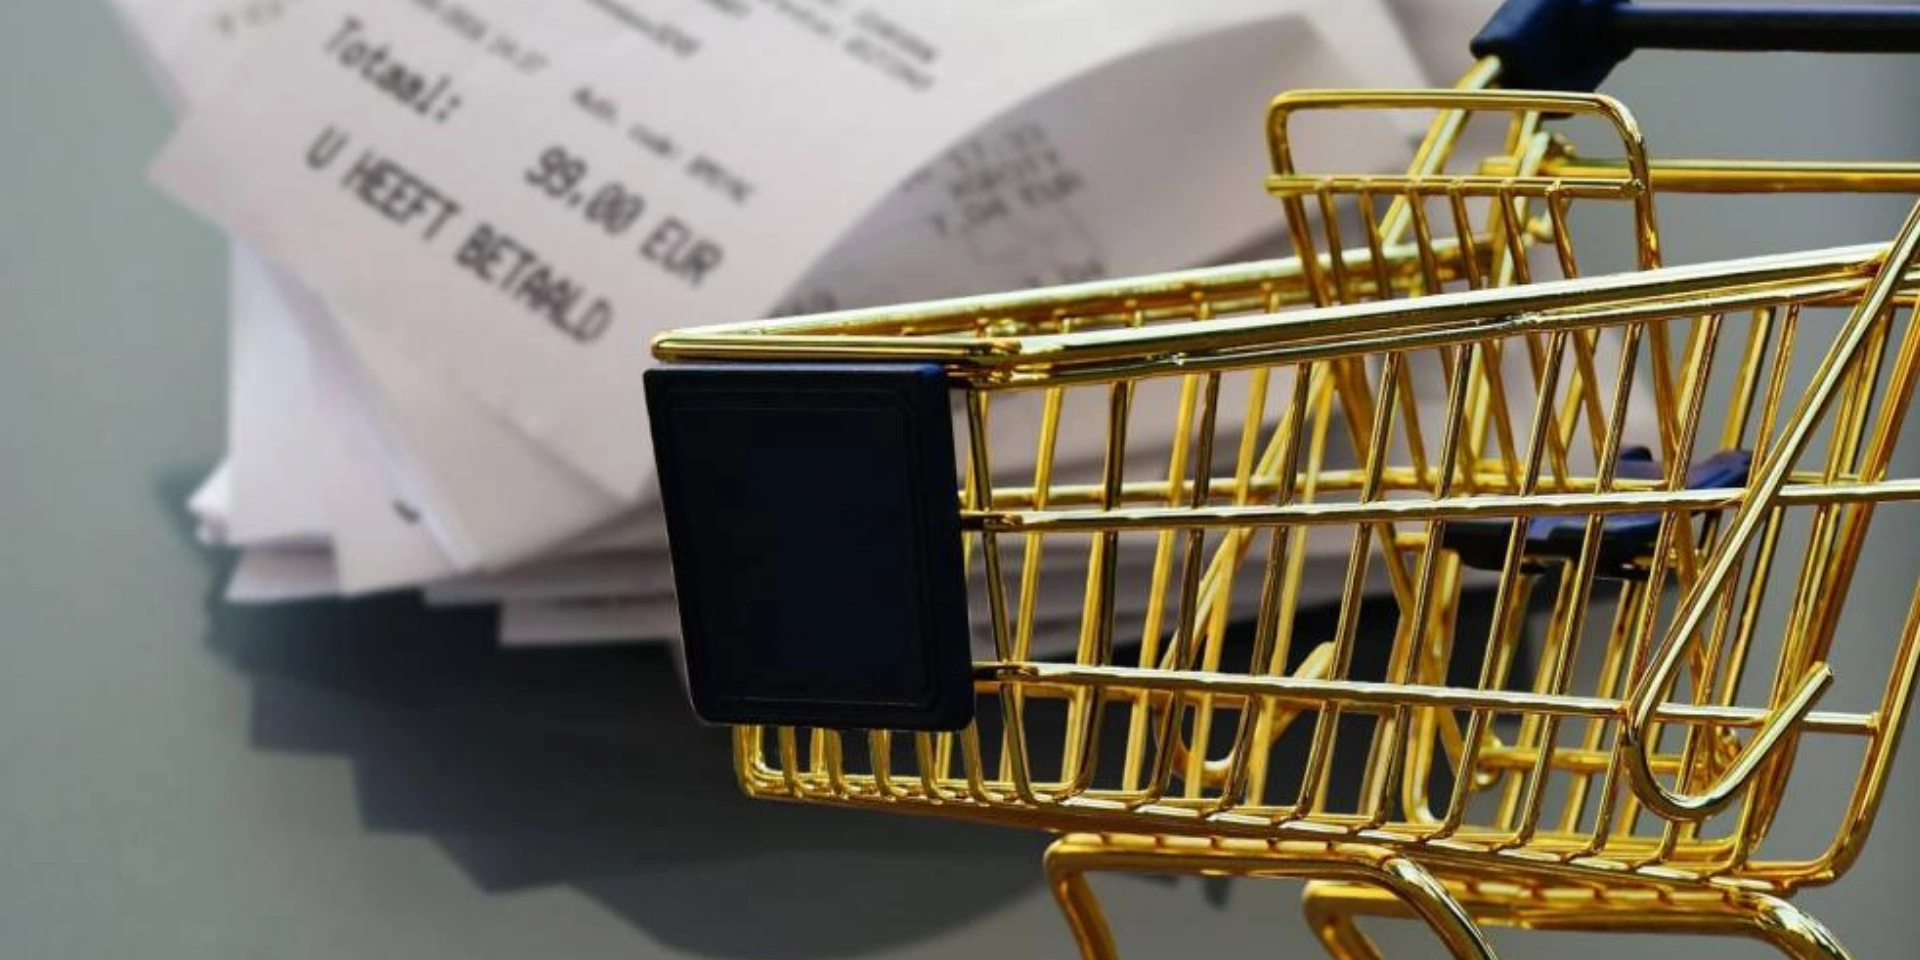 A shopping cart and a bill